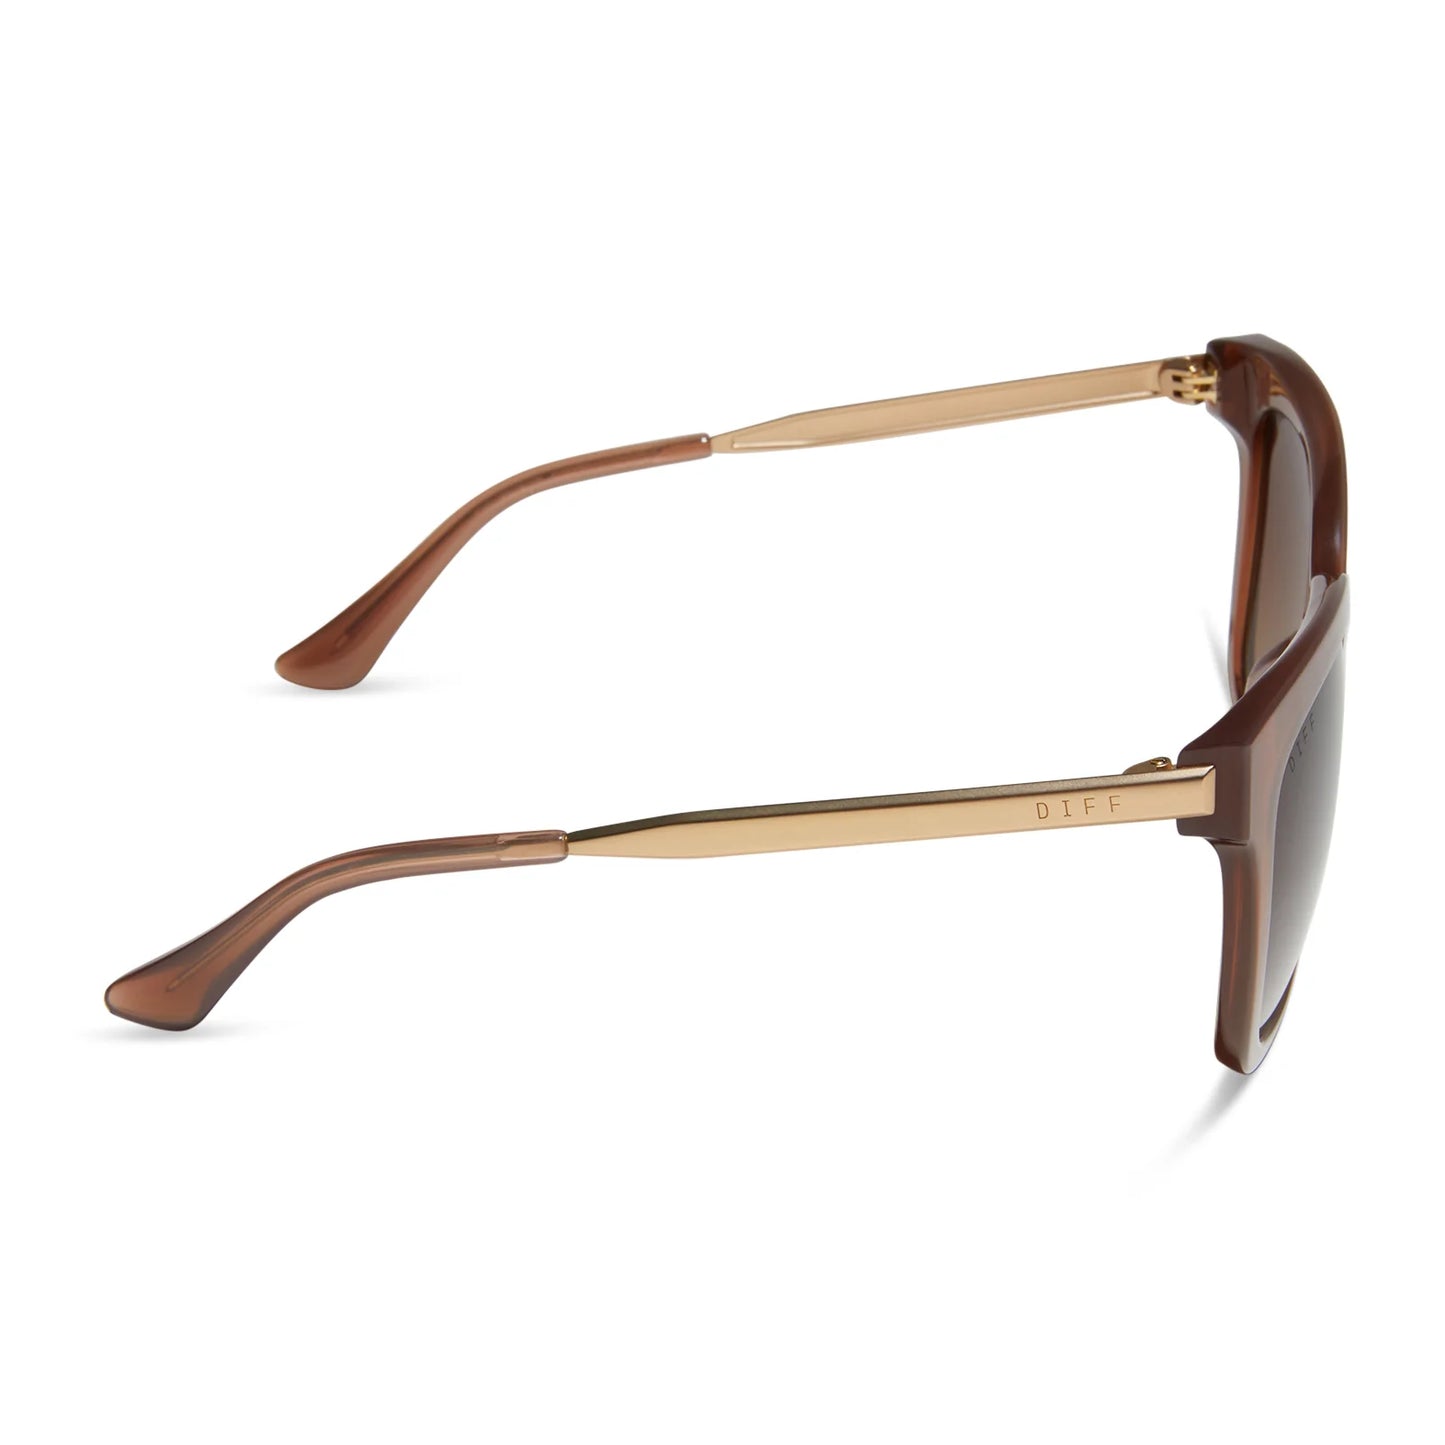 DIFF Eyewear - Bella - Macchiato Brown Gradient Polarized Sunglasses